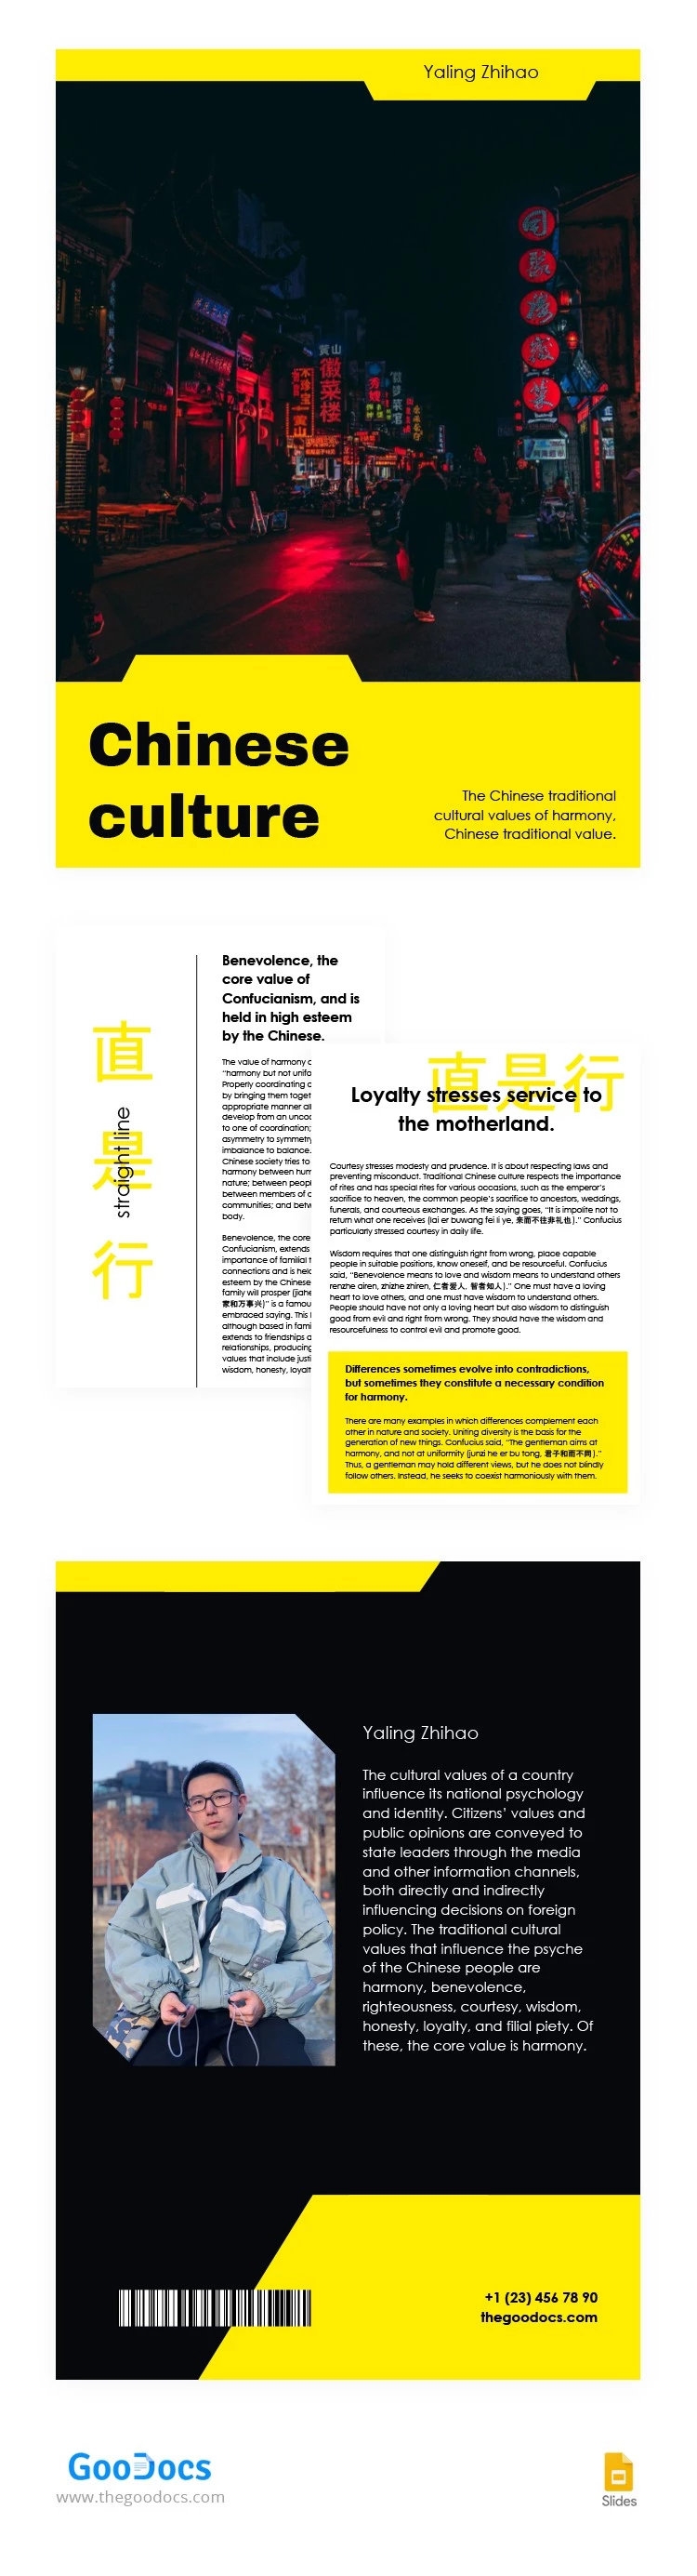 Chinesisches Kultur Buch - free Google Docs Template - 10063612